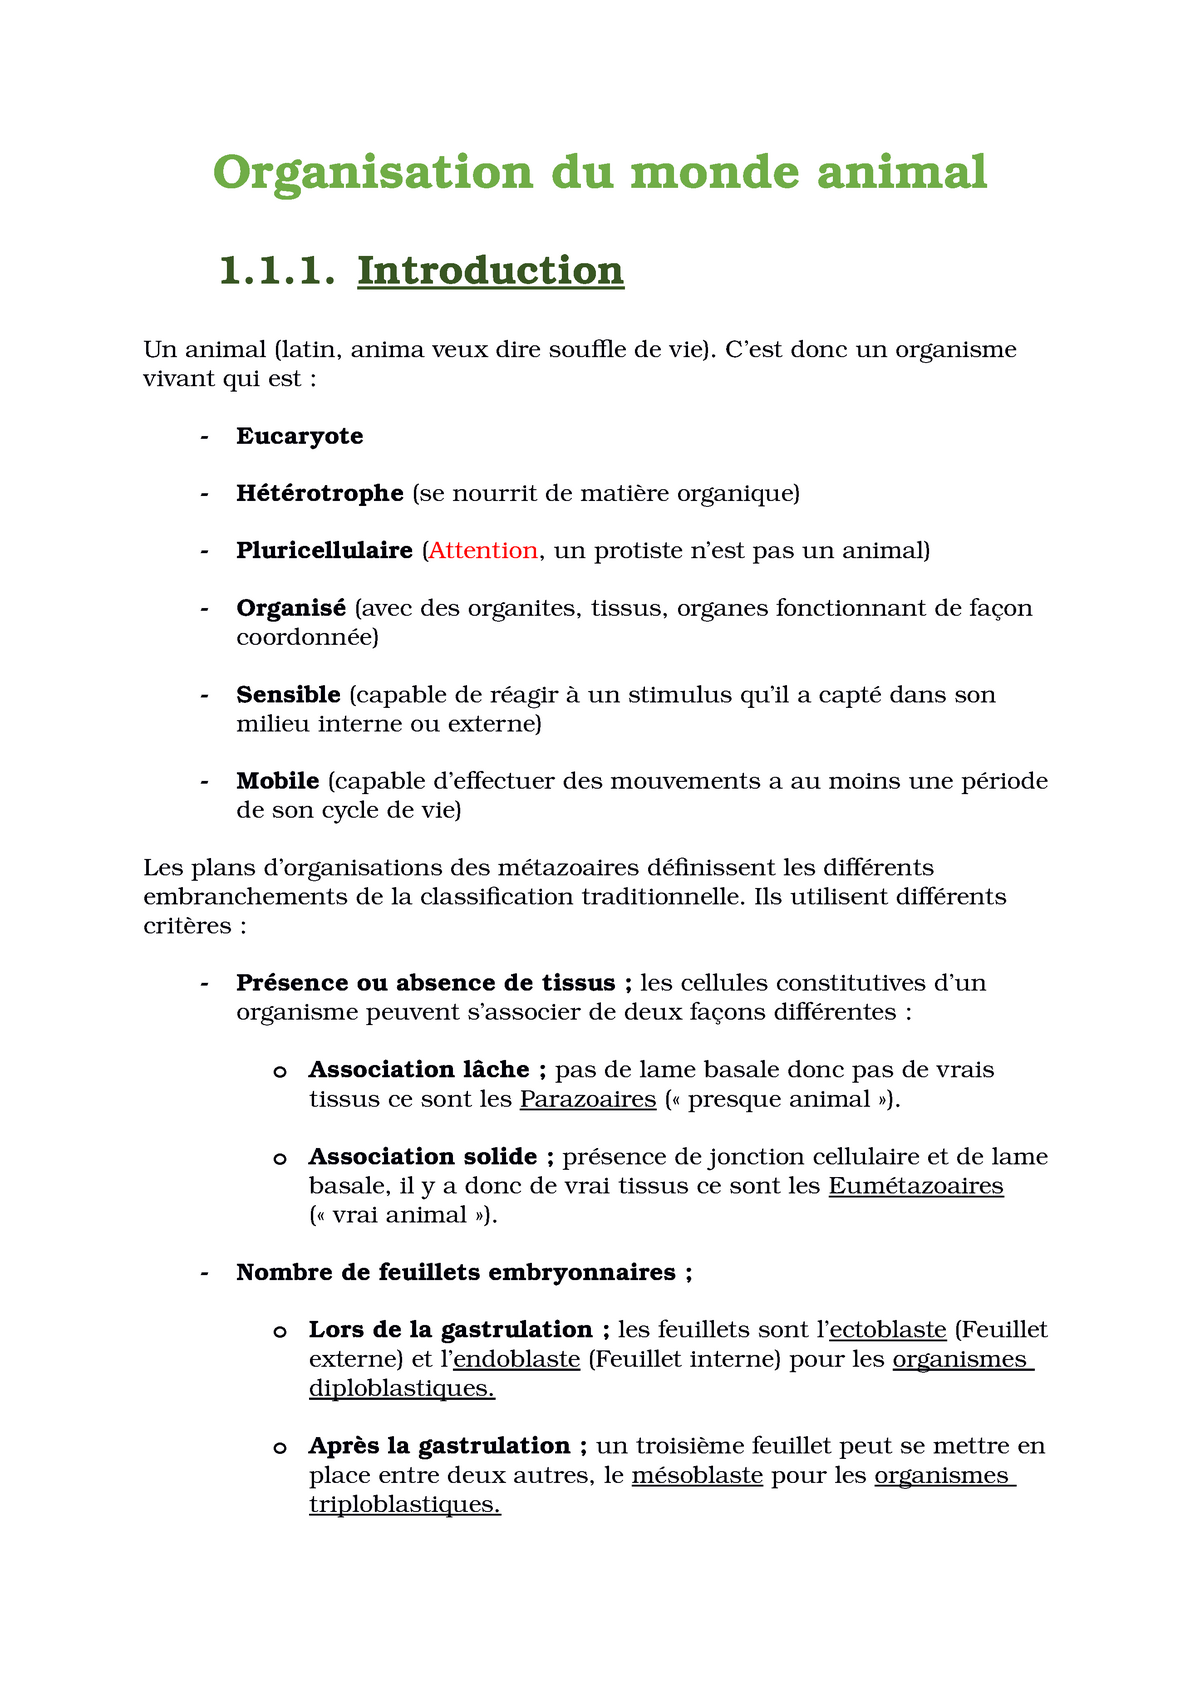 Oma Pages 1 A 10 Notes De Cours 1 Organisation Du Monde Animal Introduction Studocu